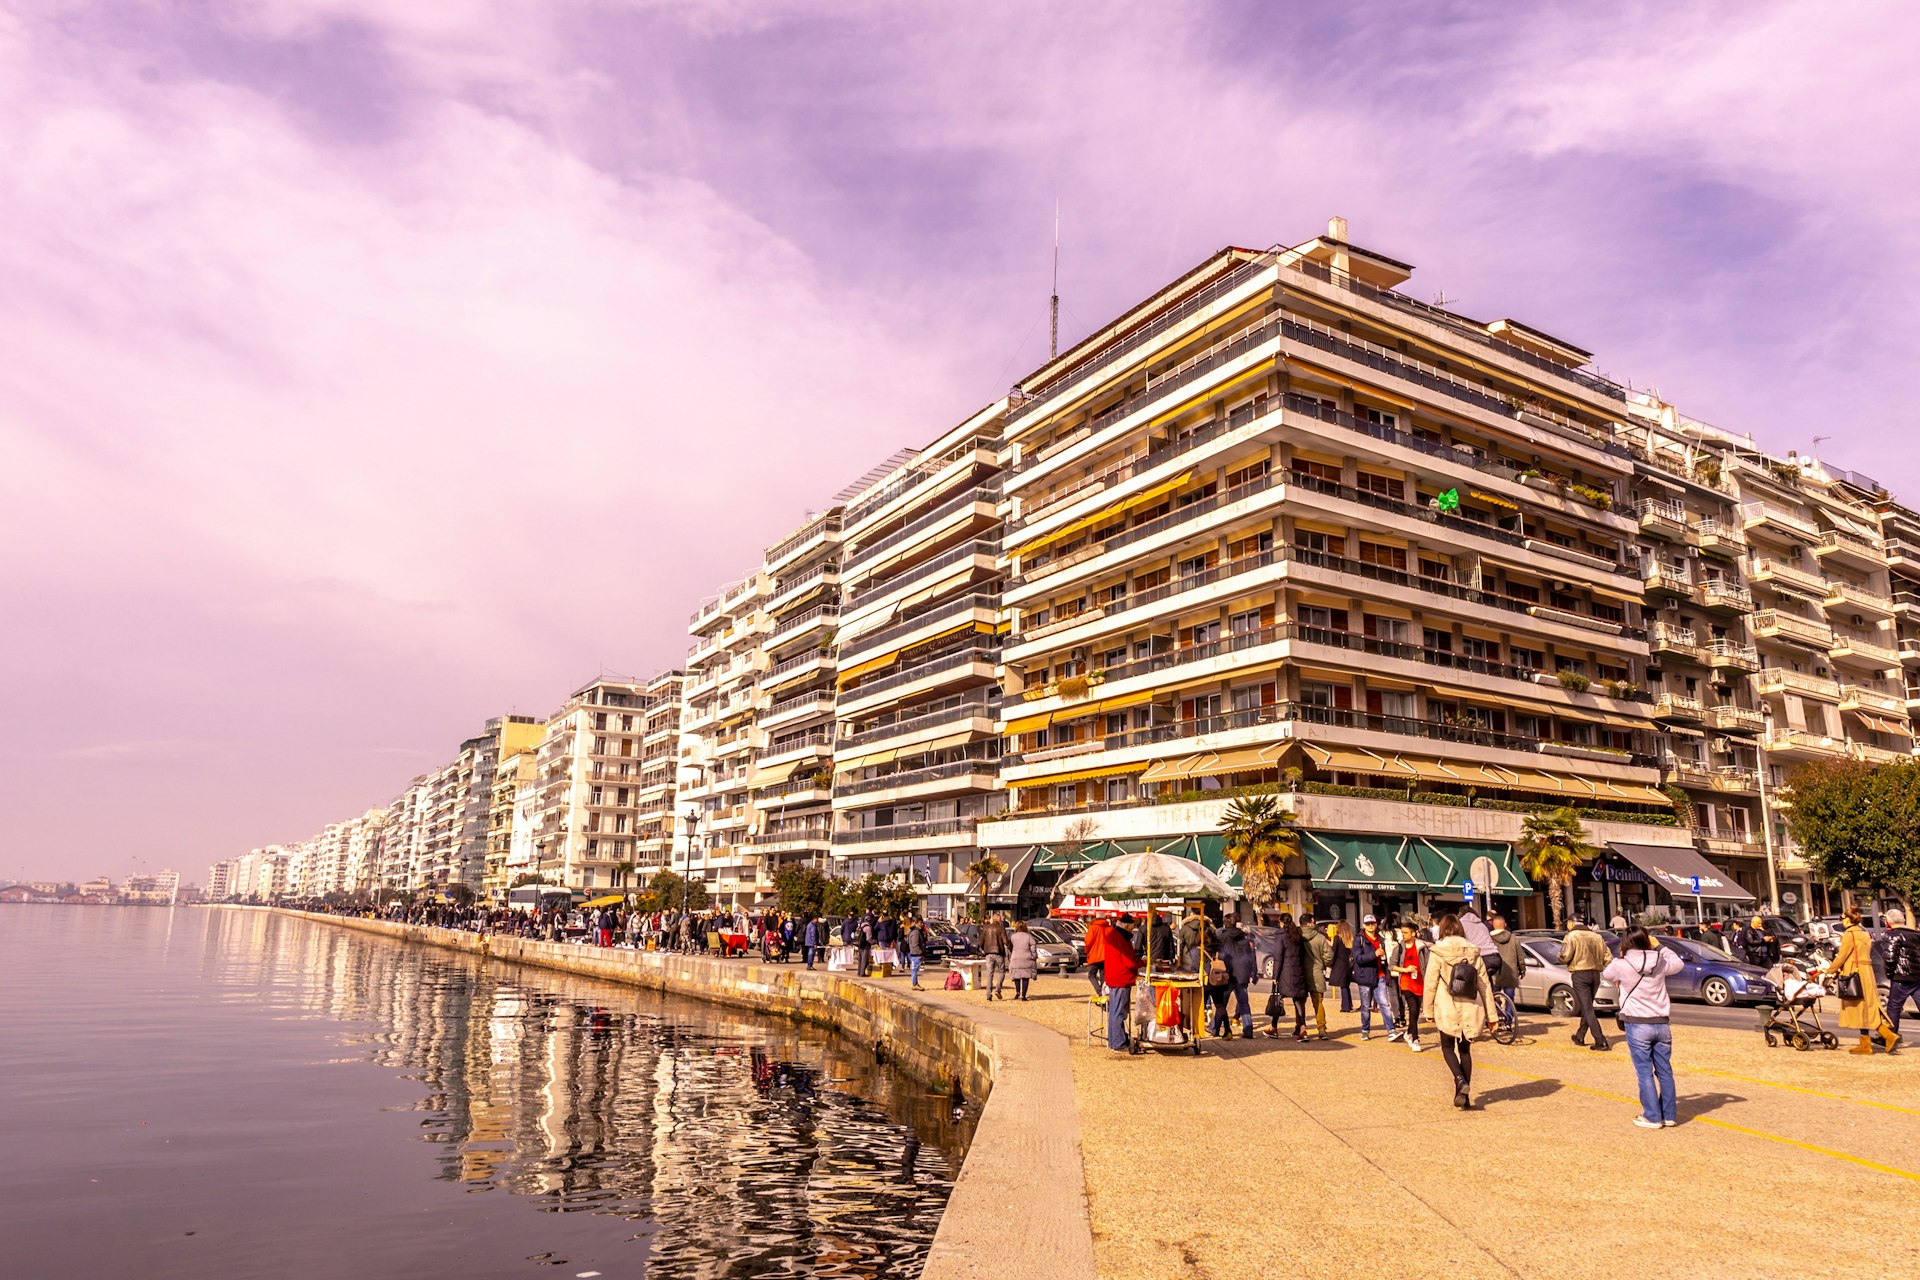 People walk by buildings on the New Waterfront promenade, Thessaloniki, Macedonia, Greece